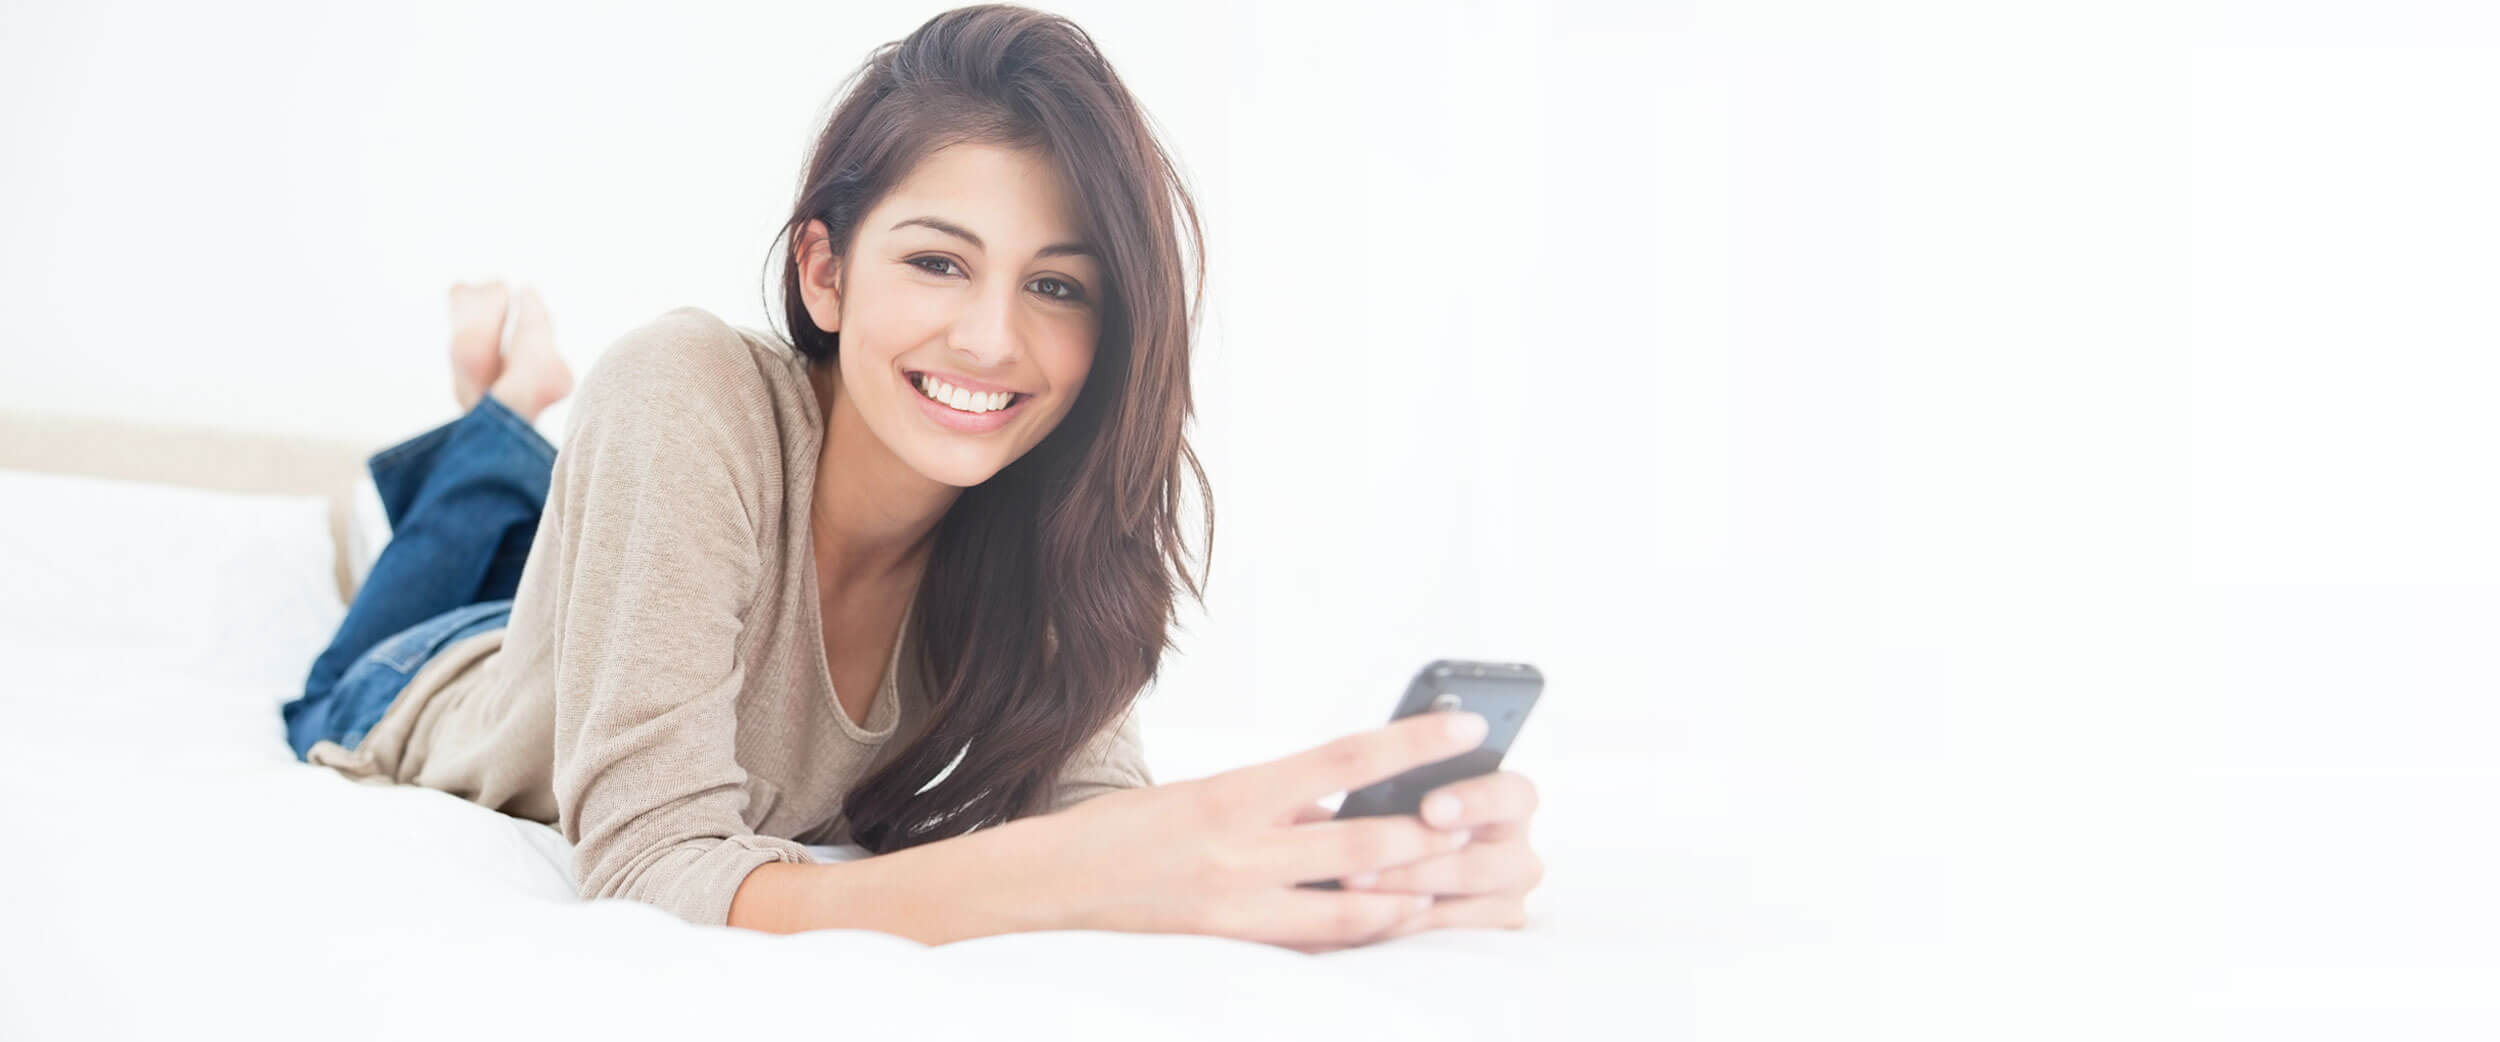 girl smiling holding phone